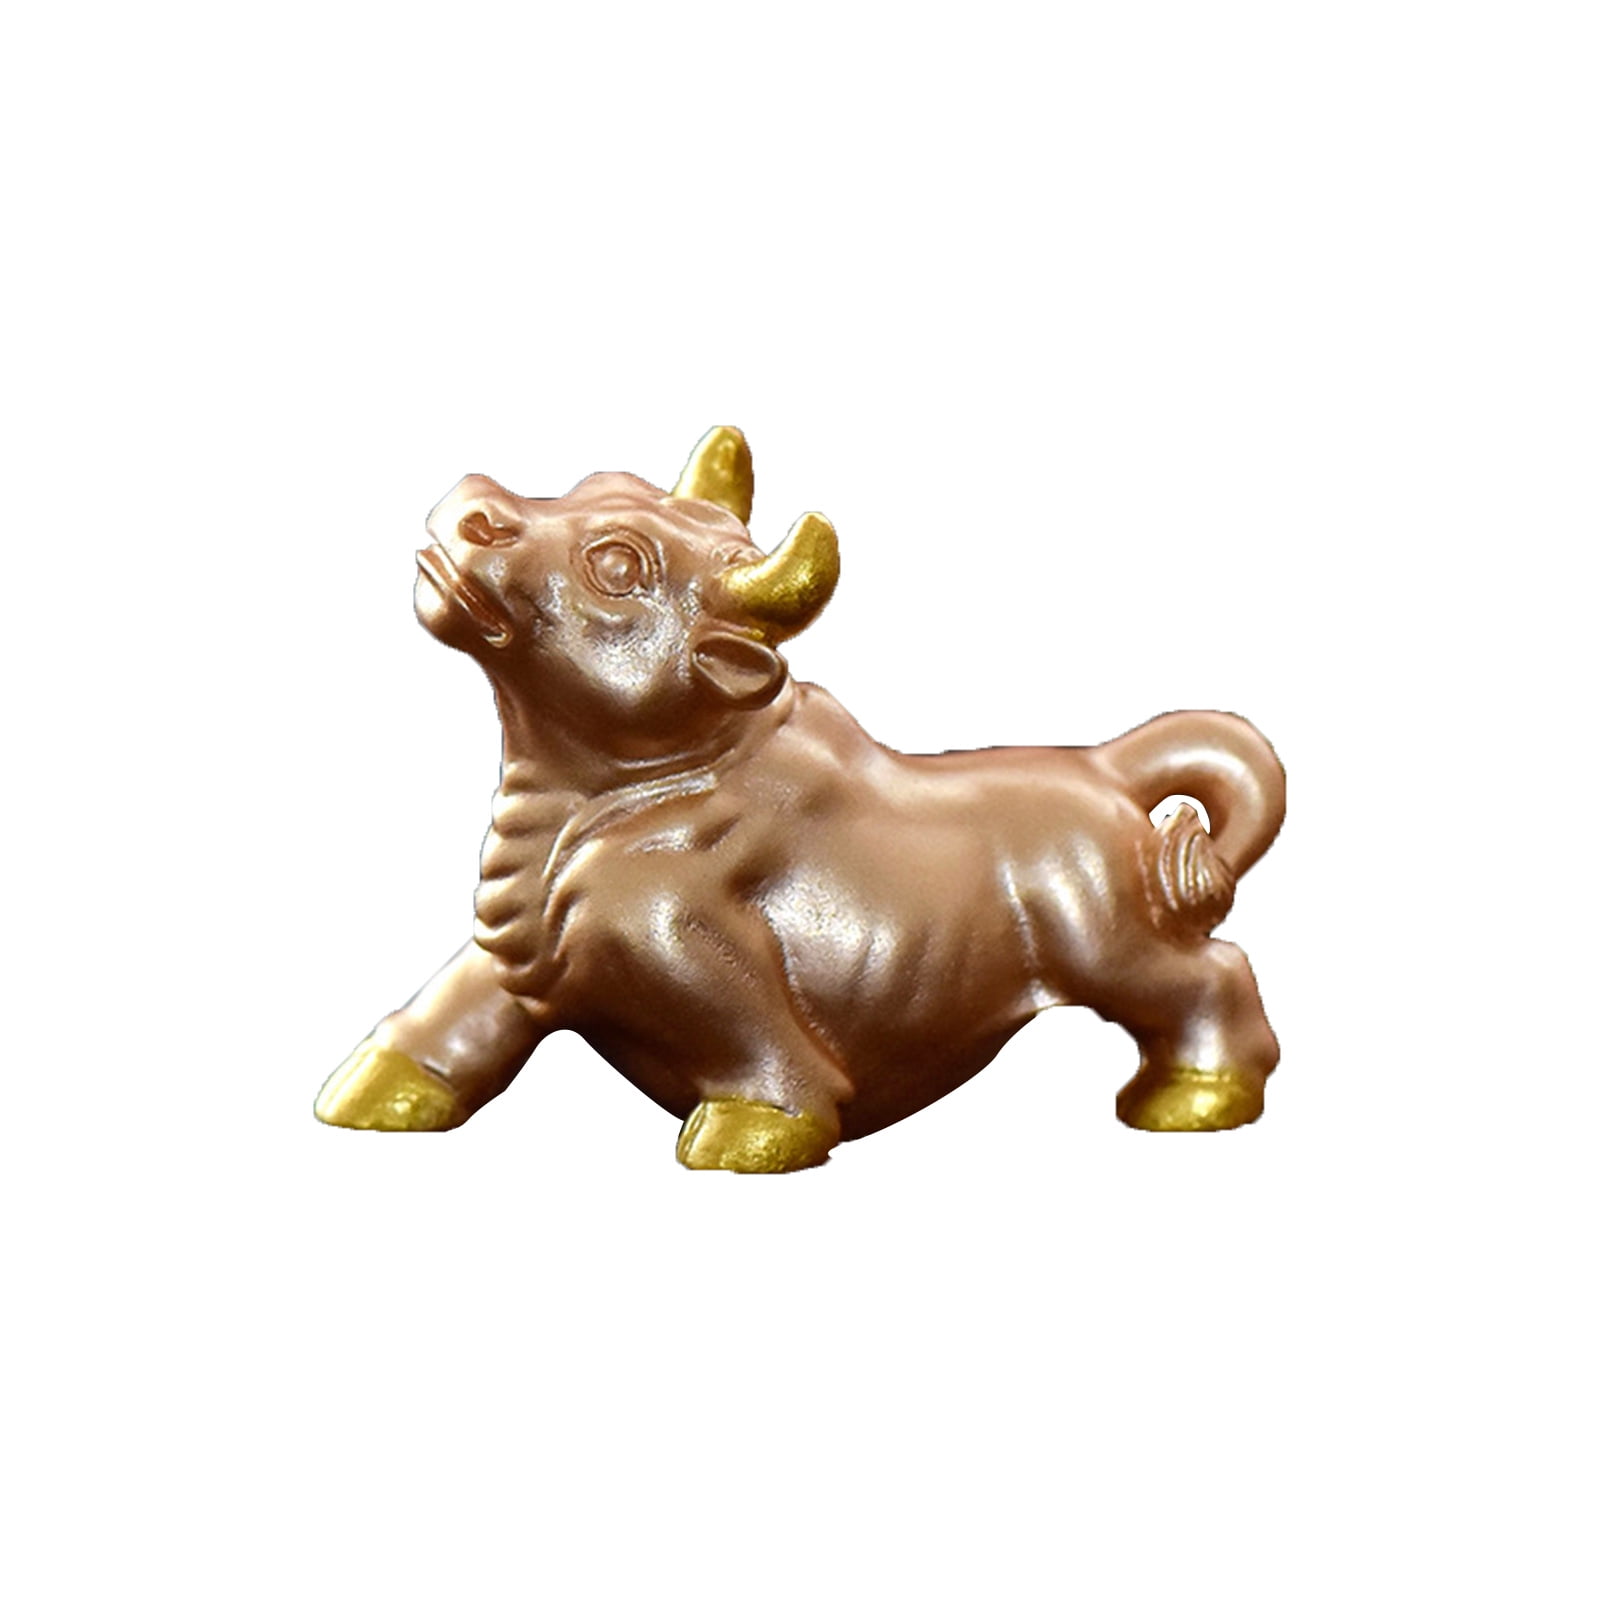 Copper Bullfighting Figurine Miniature Statue Animal Ornament Display Home Decor 